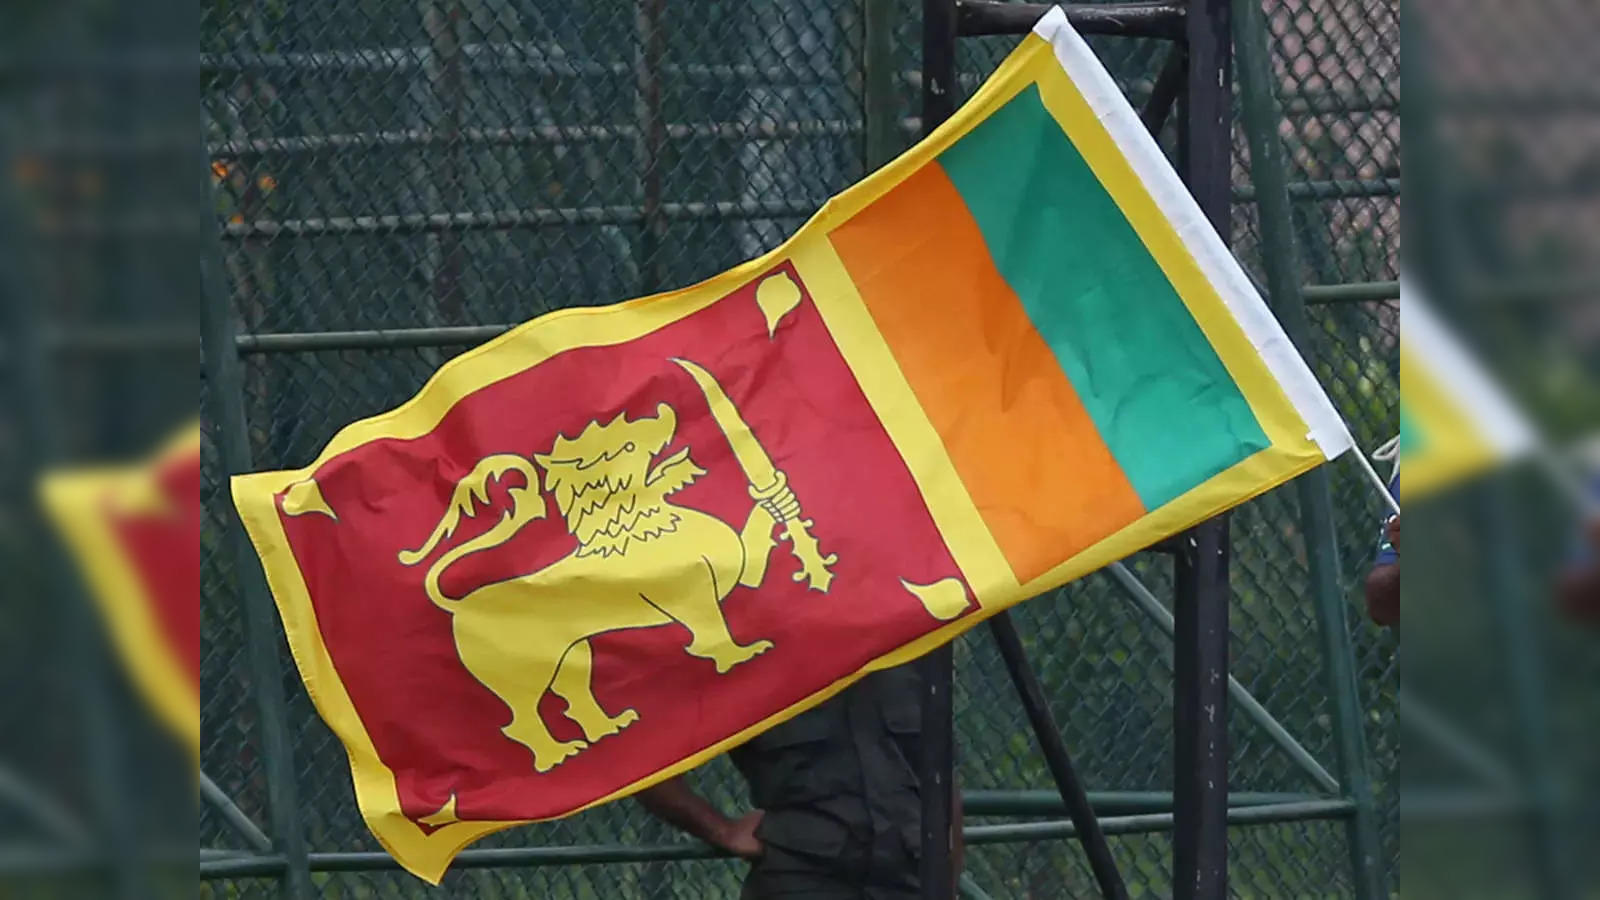 Sri Lanka - Ceylon - Country Profile - Nations Online Project